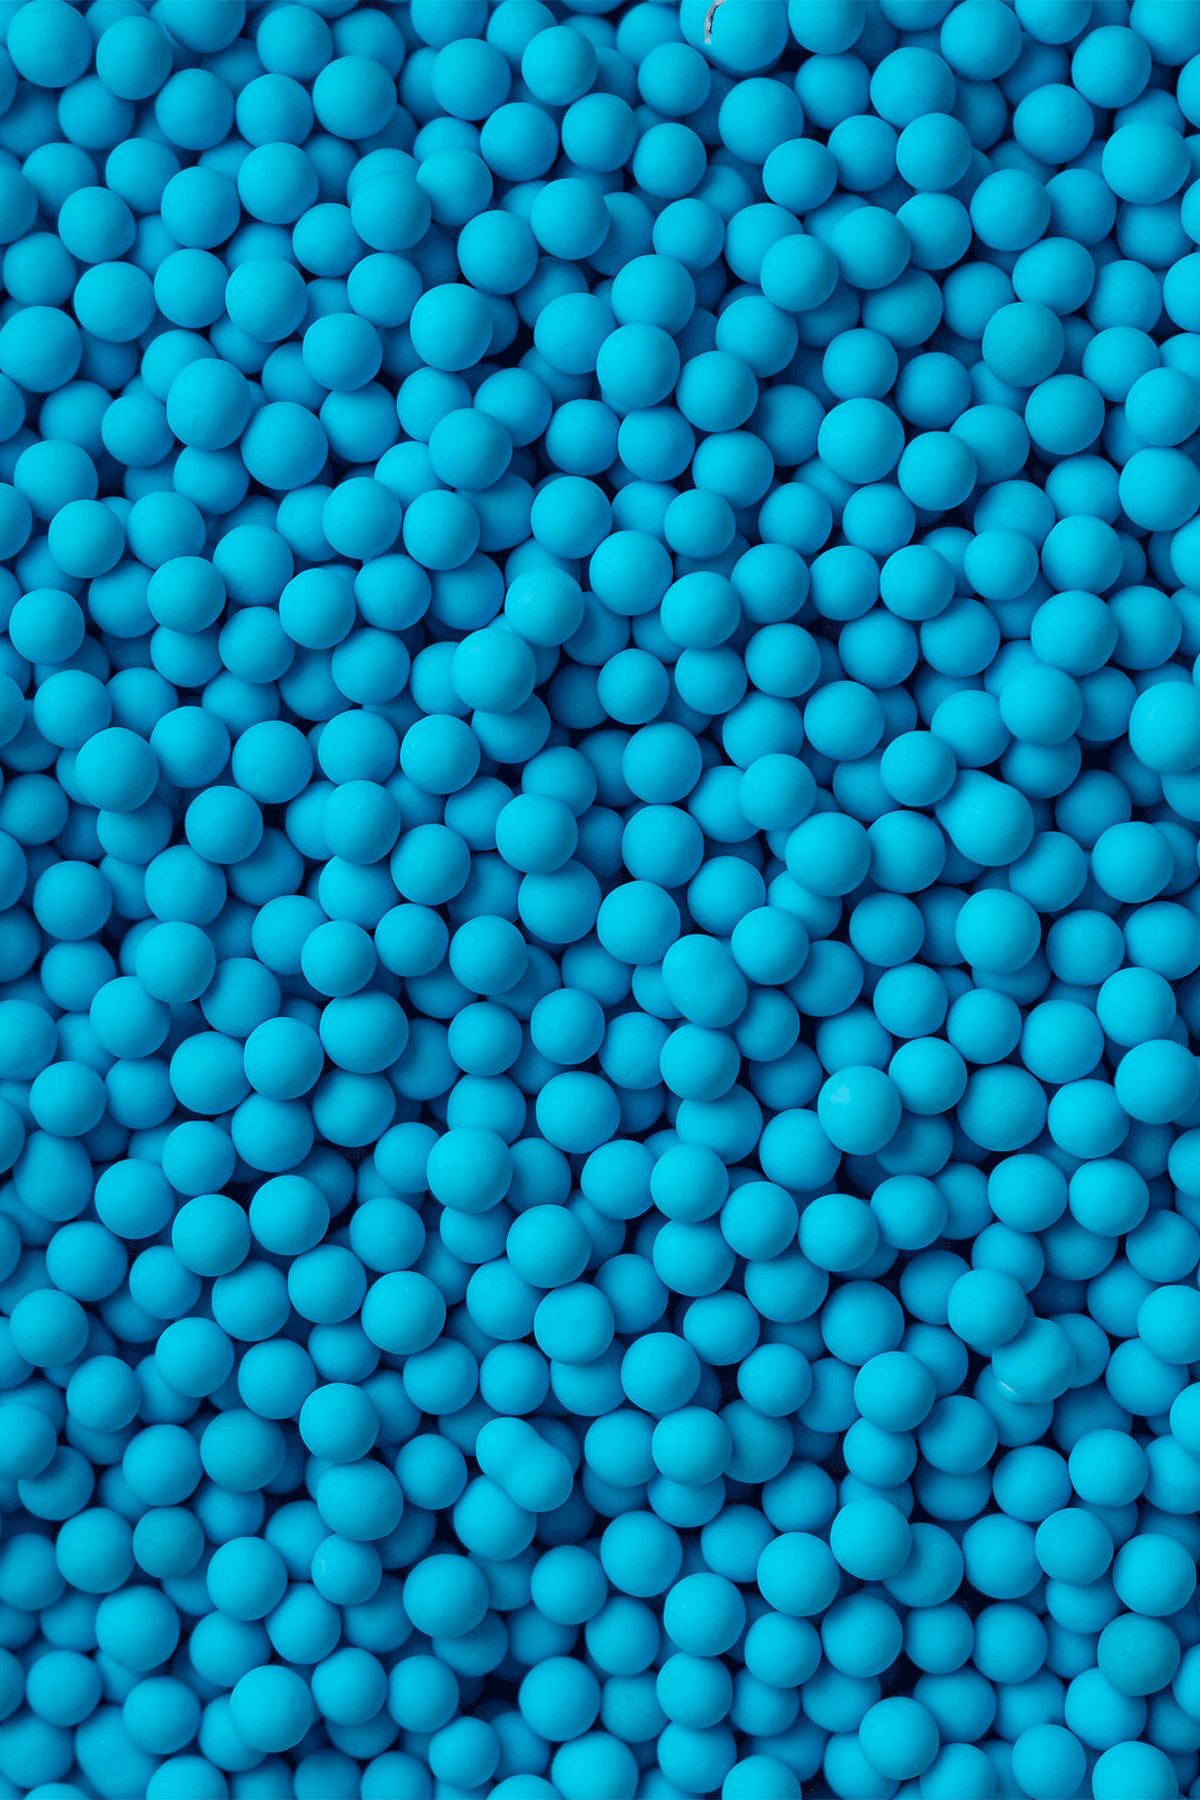 Matt Chocolate Balls - Turquoise - (Small/6mm) Sprinkles Sprinkly